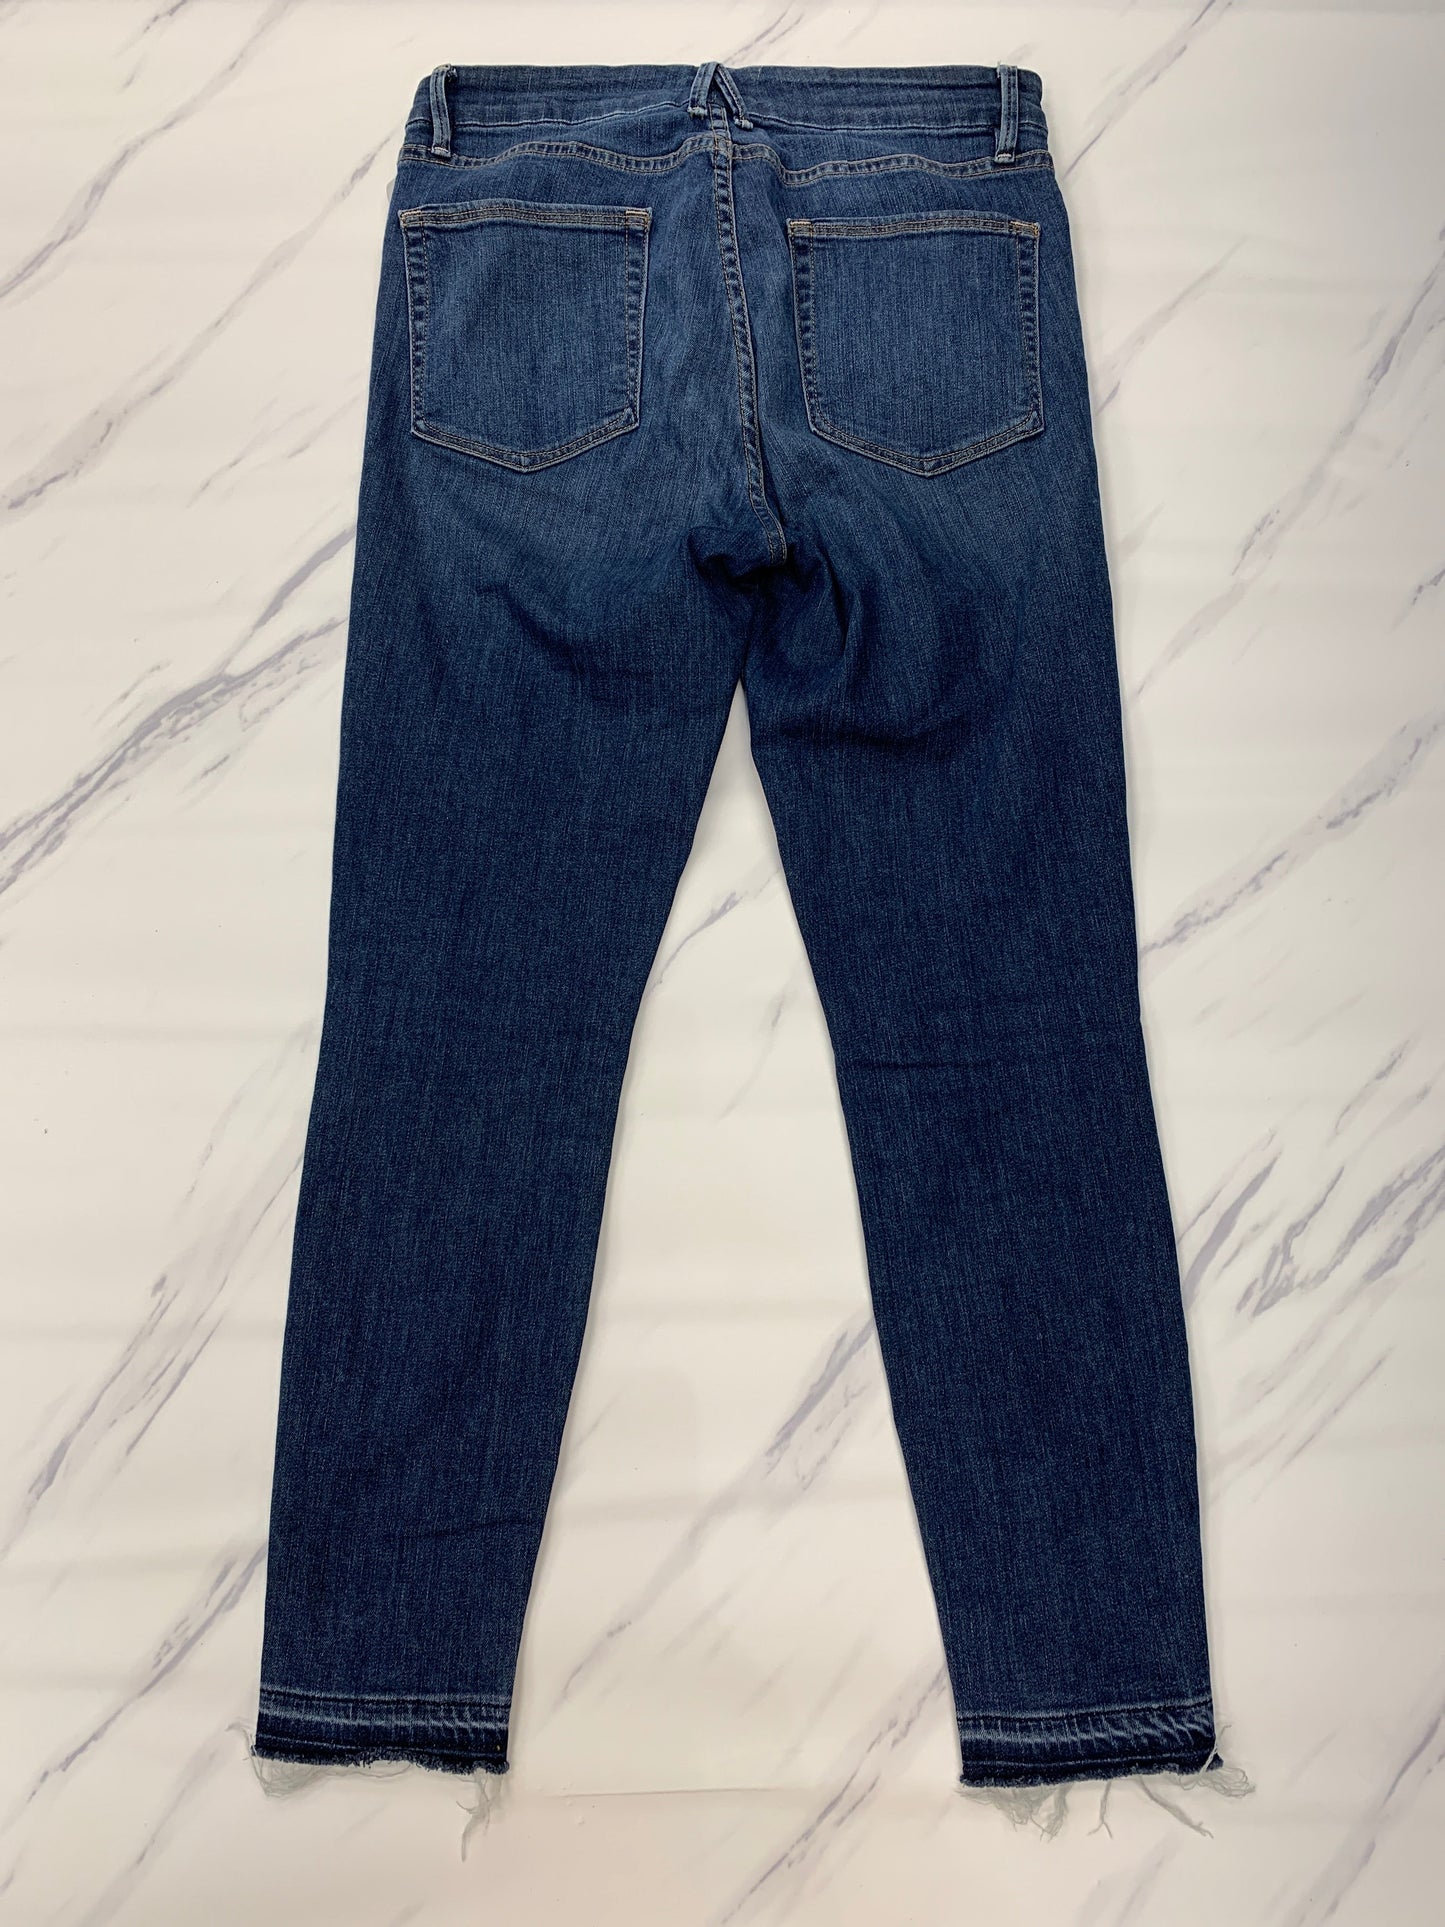 Jeans Designer Good American, Size 12